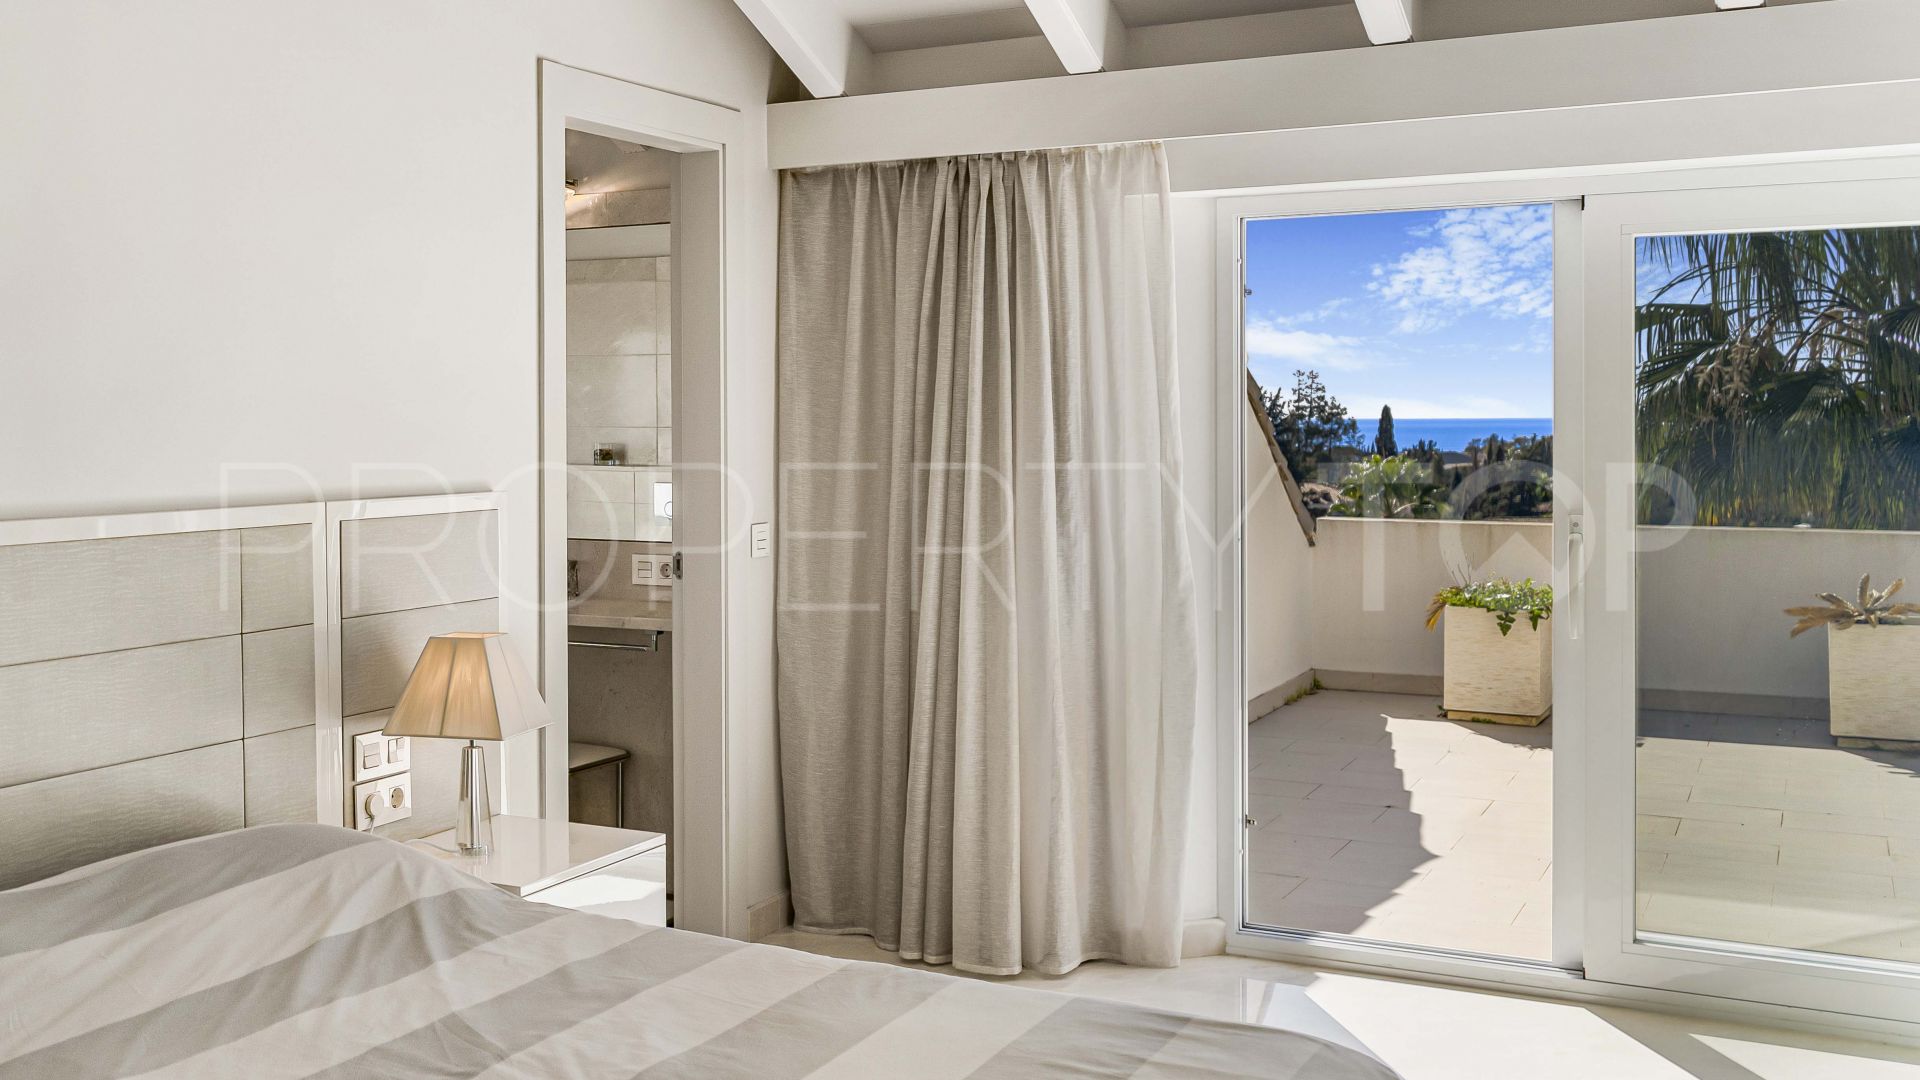 Marbella Golden Mile duplex penthouse for sale